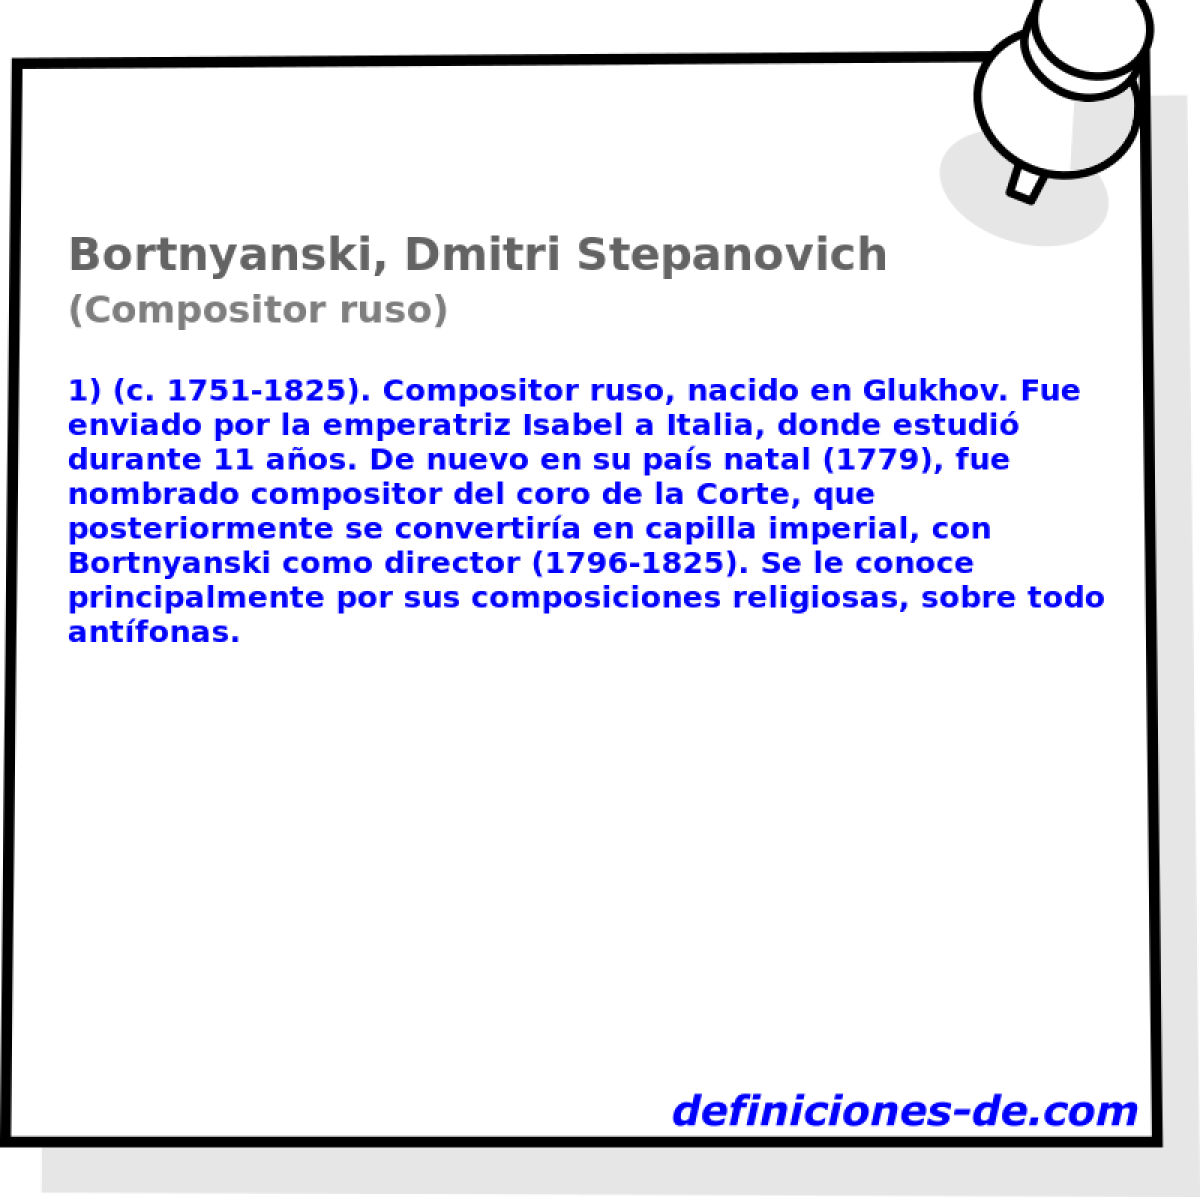 Bortnyanski, Dmitri Stepanovich (Compositor ruso)